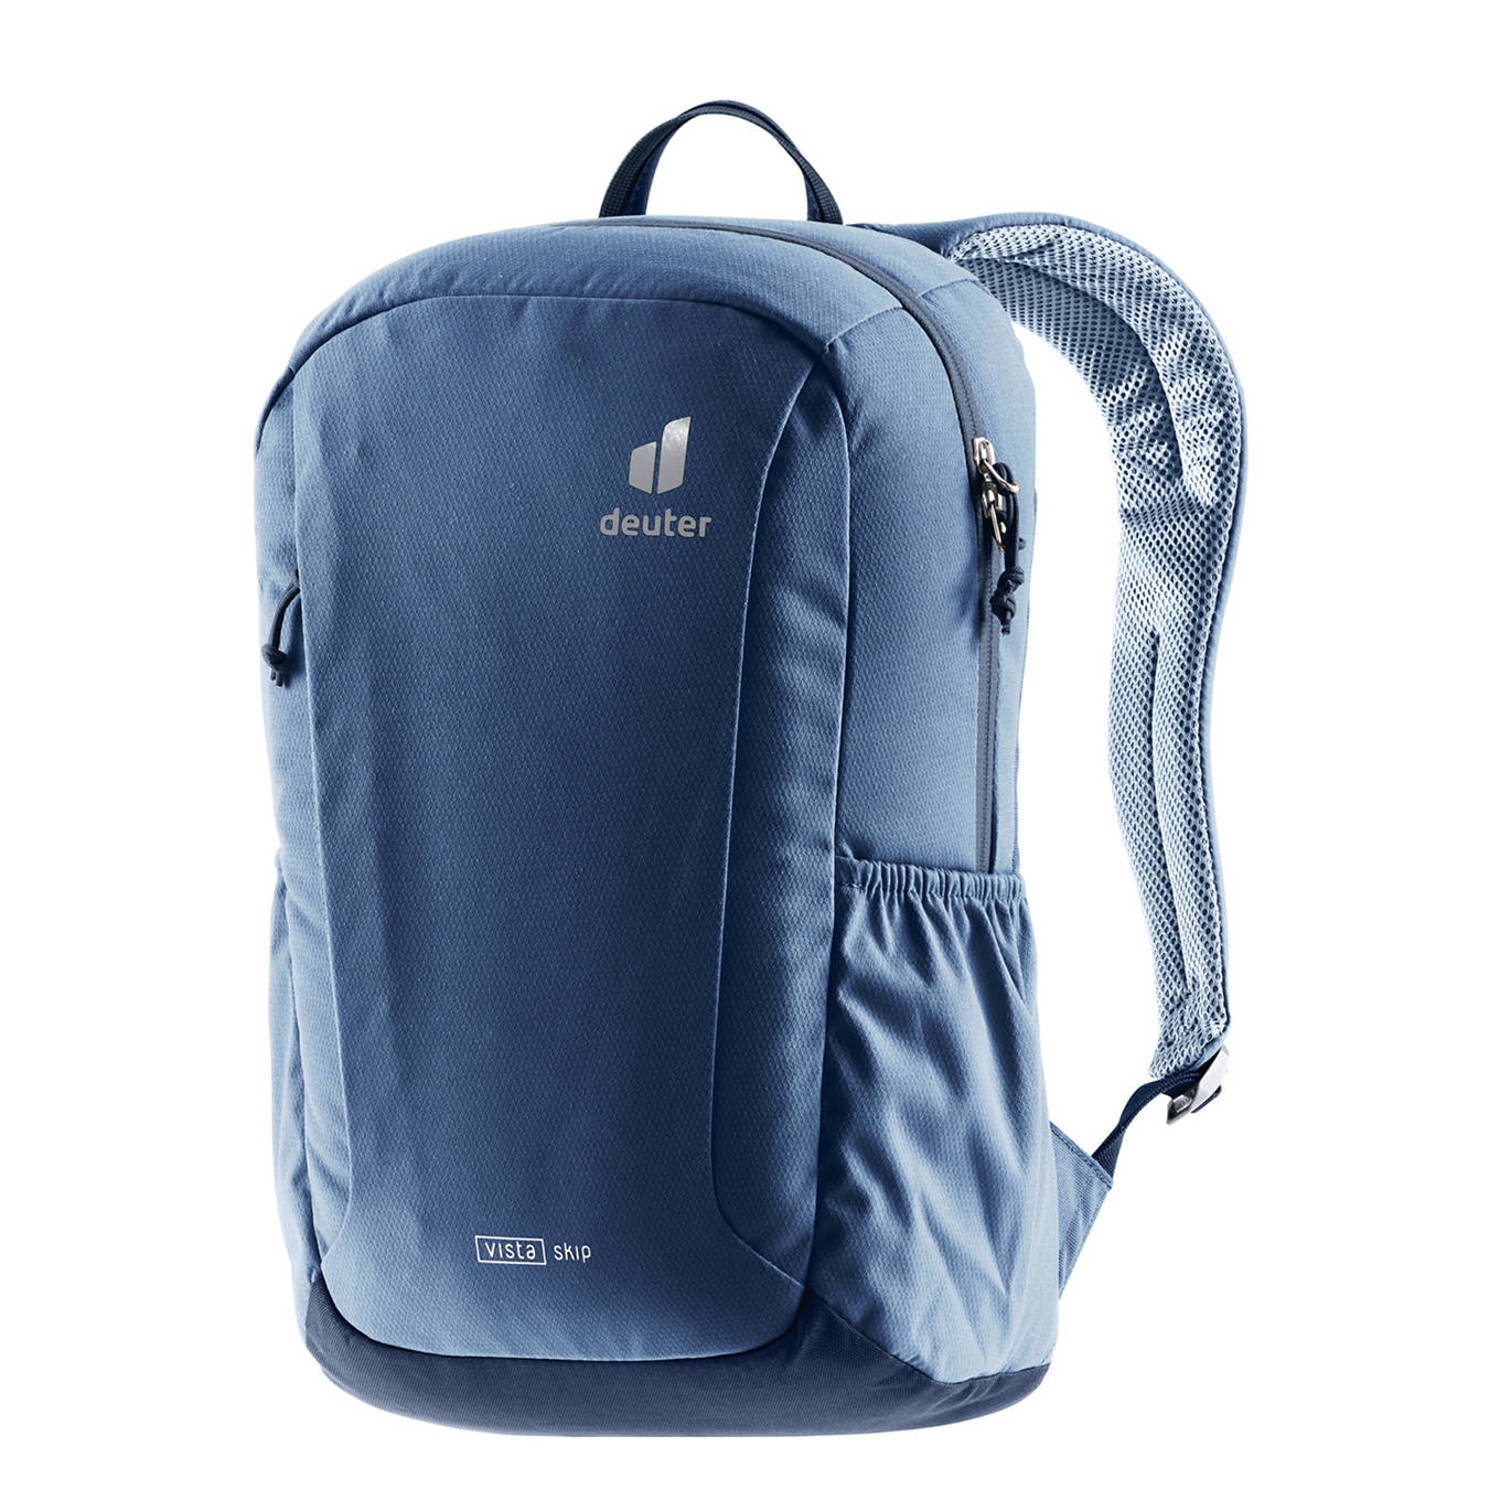 Deuter backpack Vista Skip 14L blauw